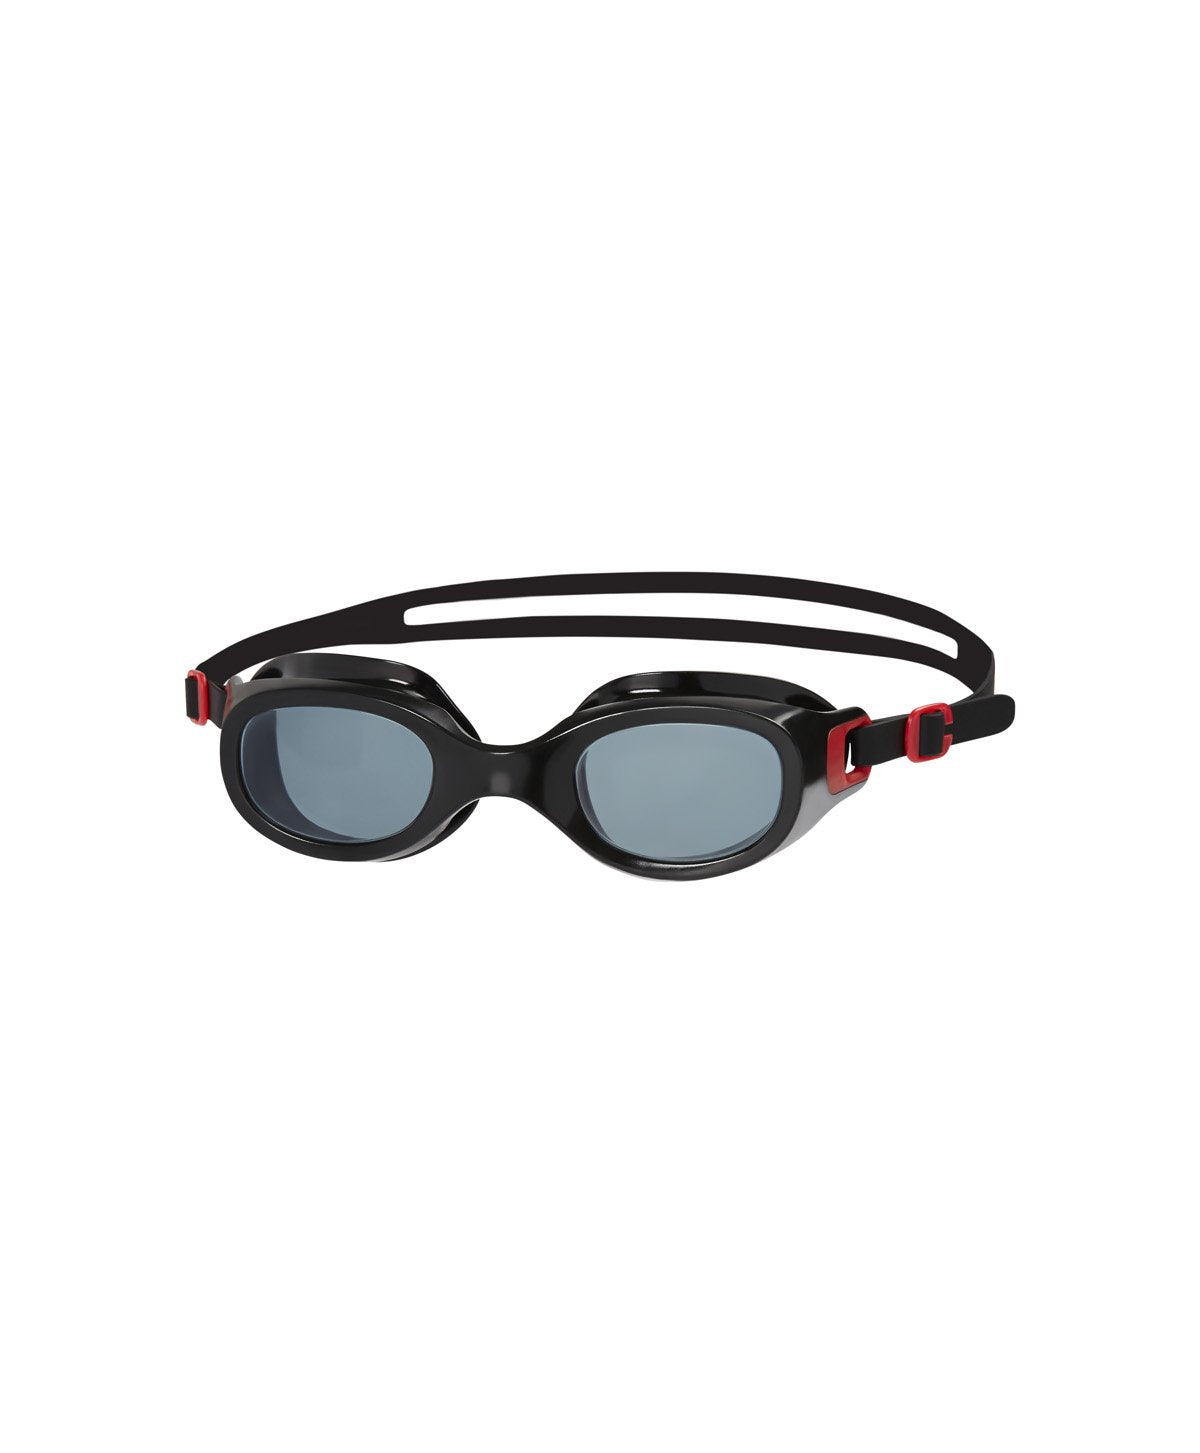 Speedo Futura Classic Goggles, One Size (Fluorescent Red/Smoke) - Best Price online Prokicksports.com